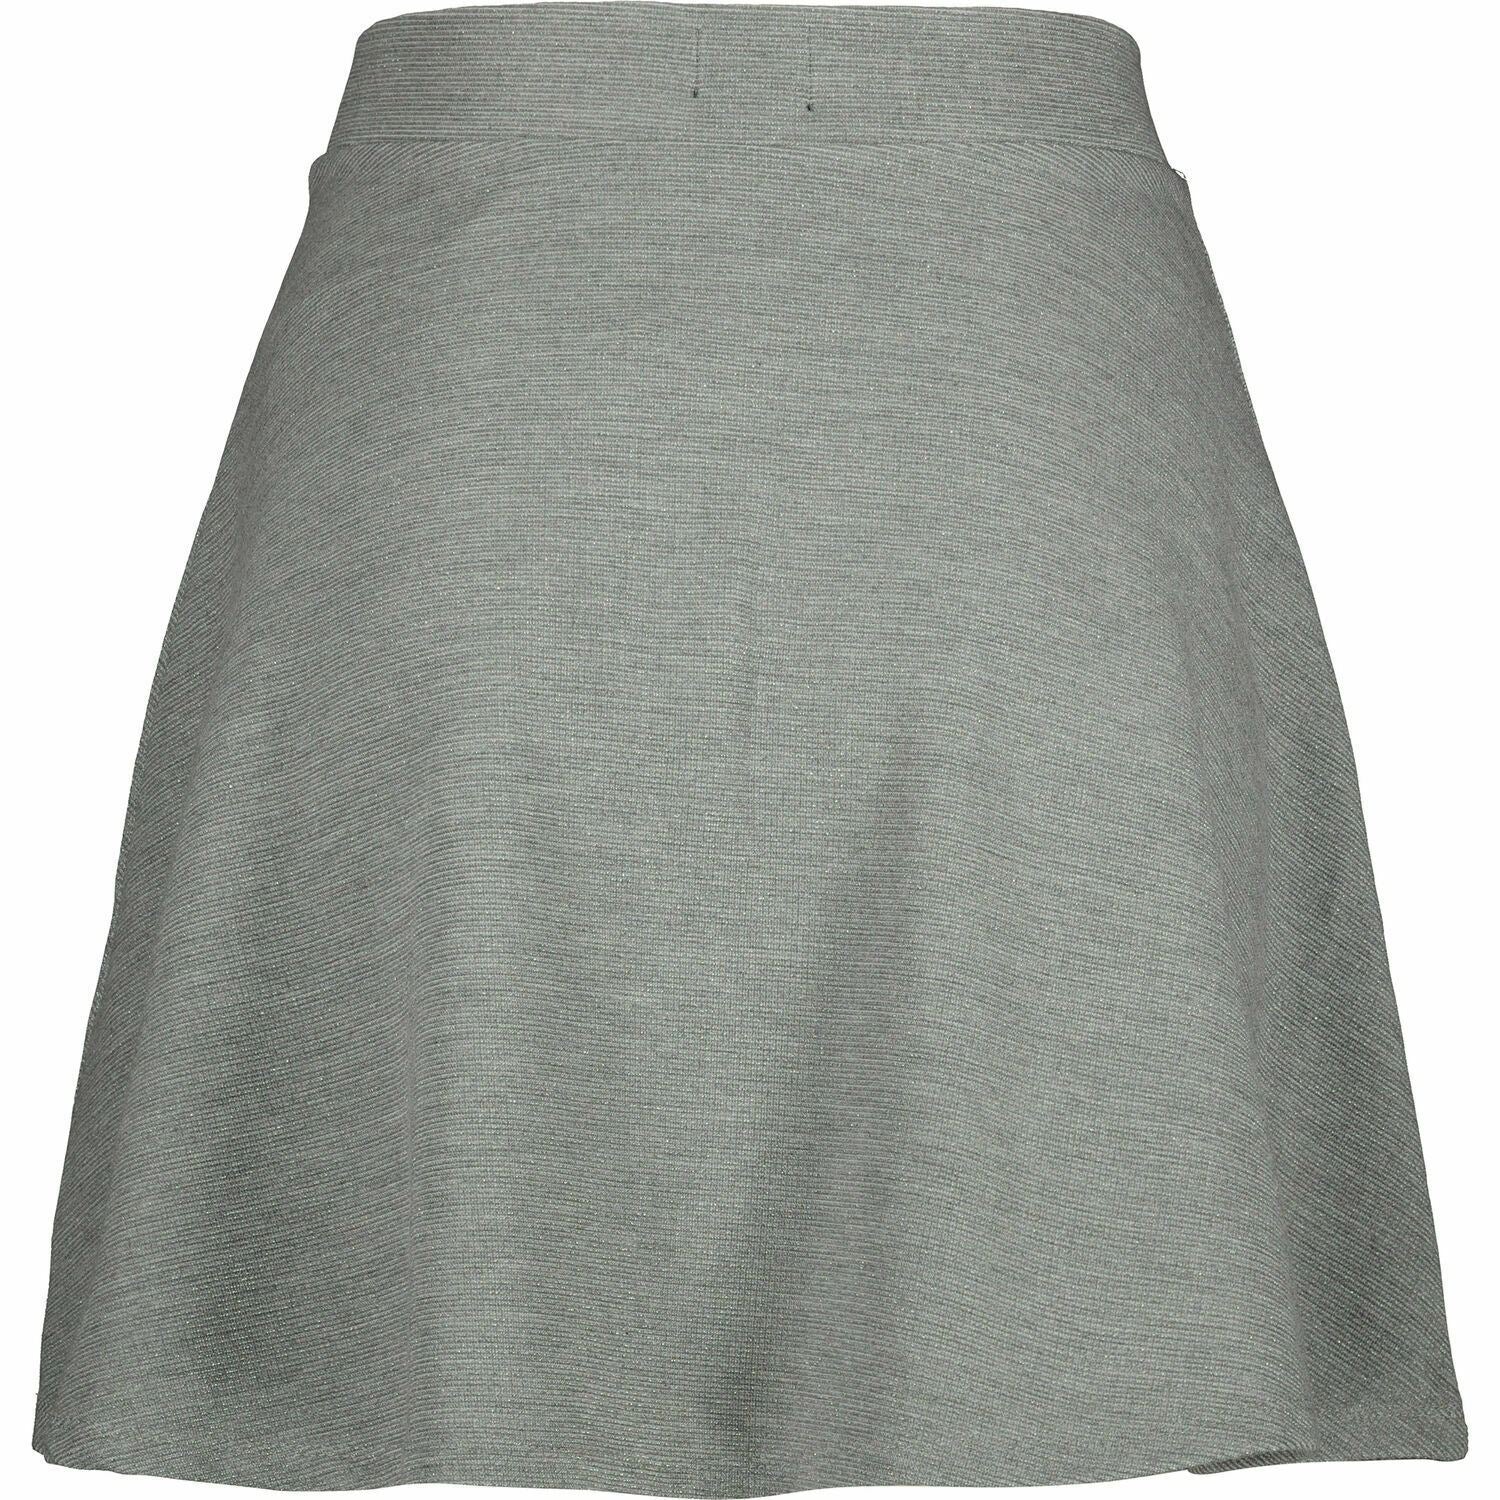 SUPERDRY Women's TAYLA Iron Grey Sparkle Skater Skirt, size XS / UK 8